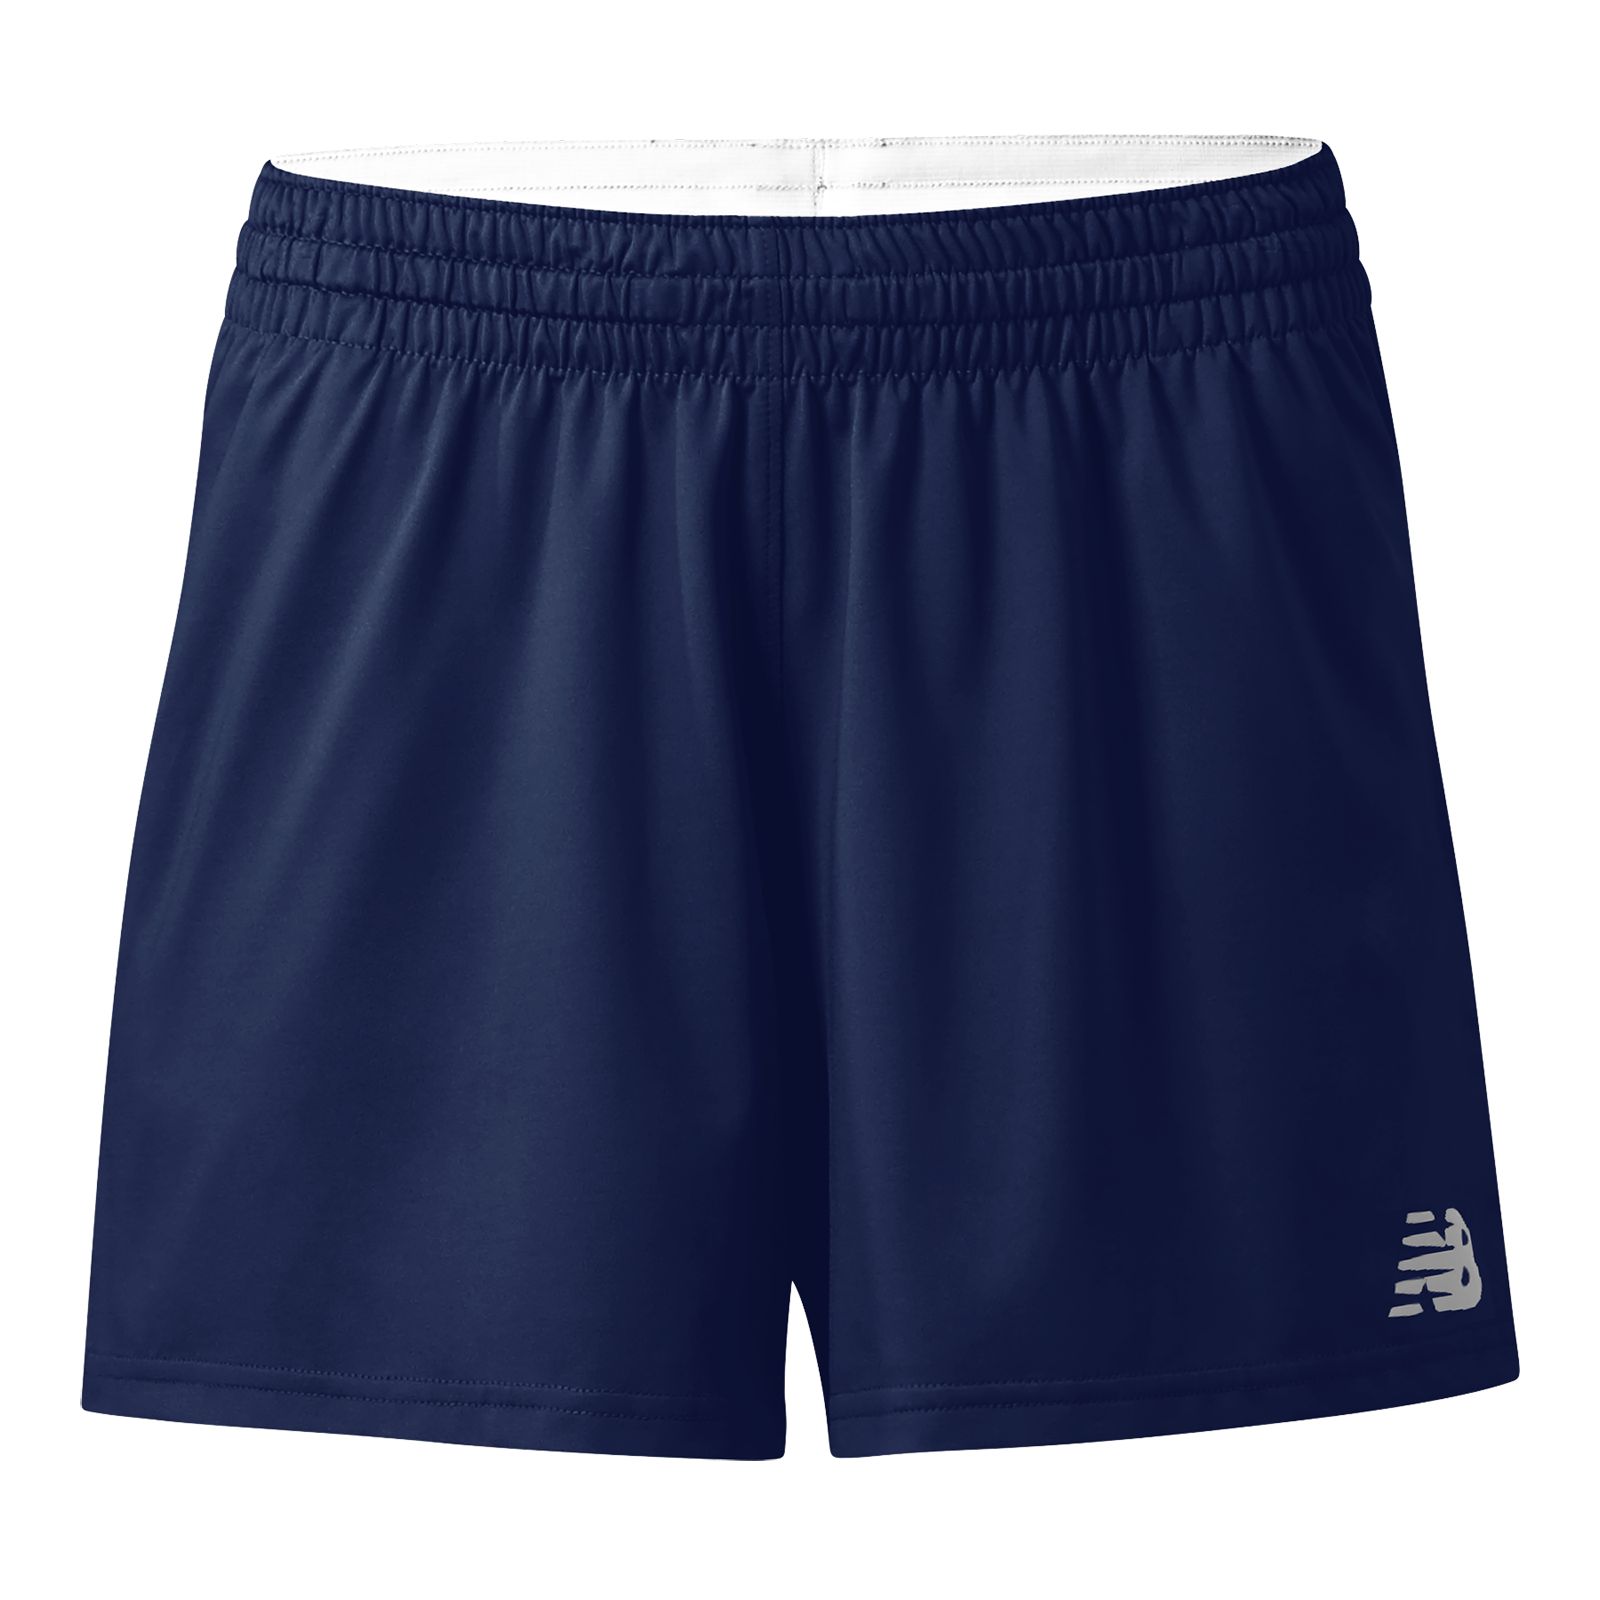 NBW 4" Tech Shorts Embellished, Team Navy image number 0